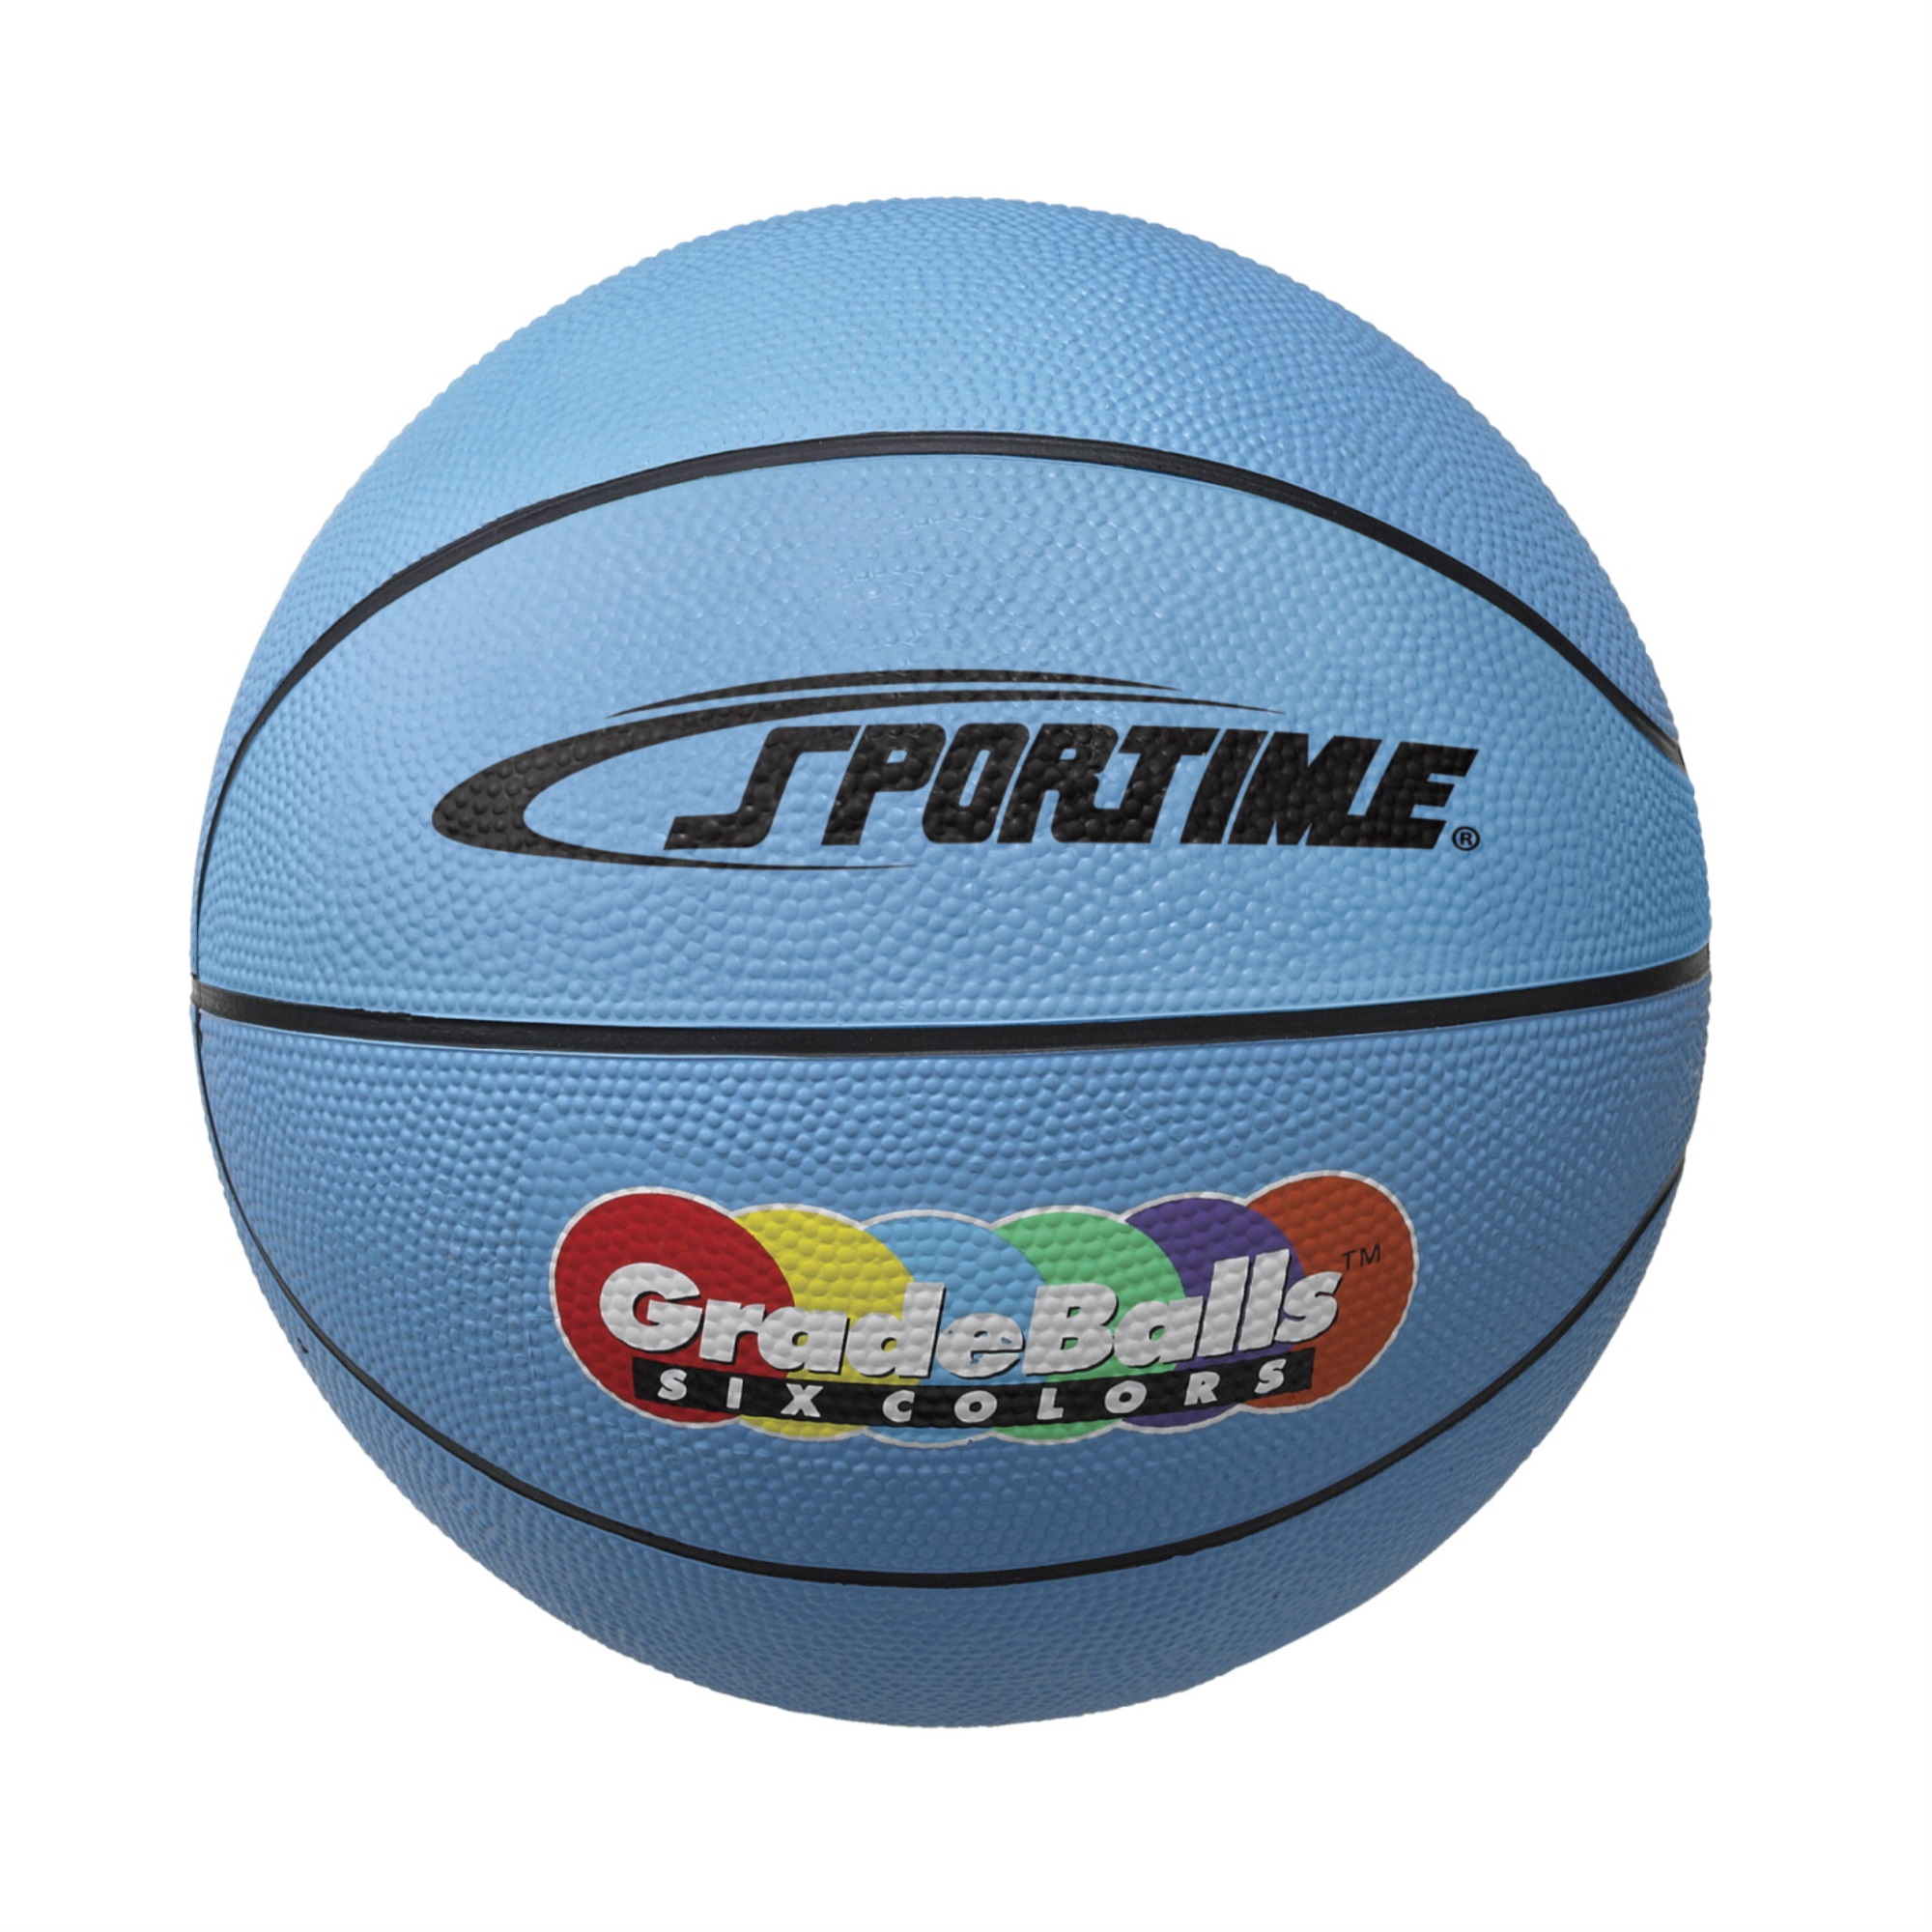 Sportime 27 Inch Gradeball Rubber Junior Basketball, Blue